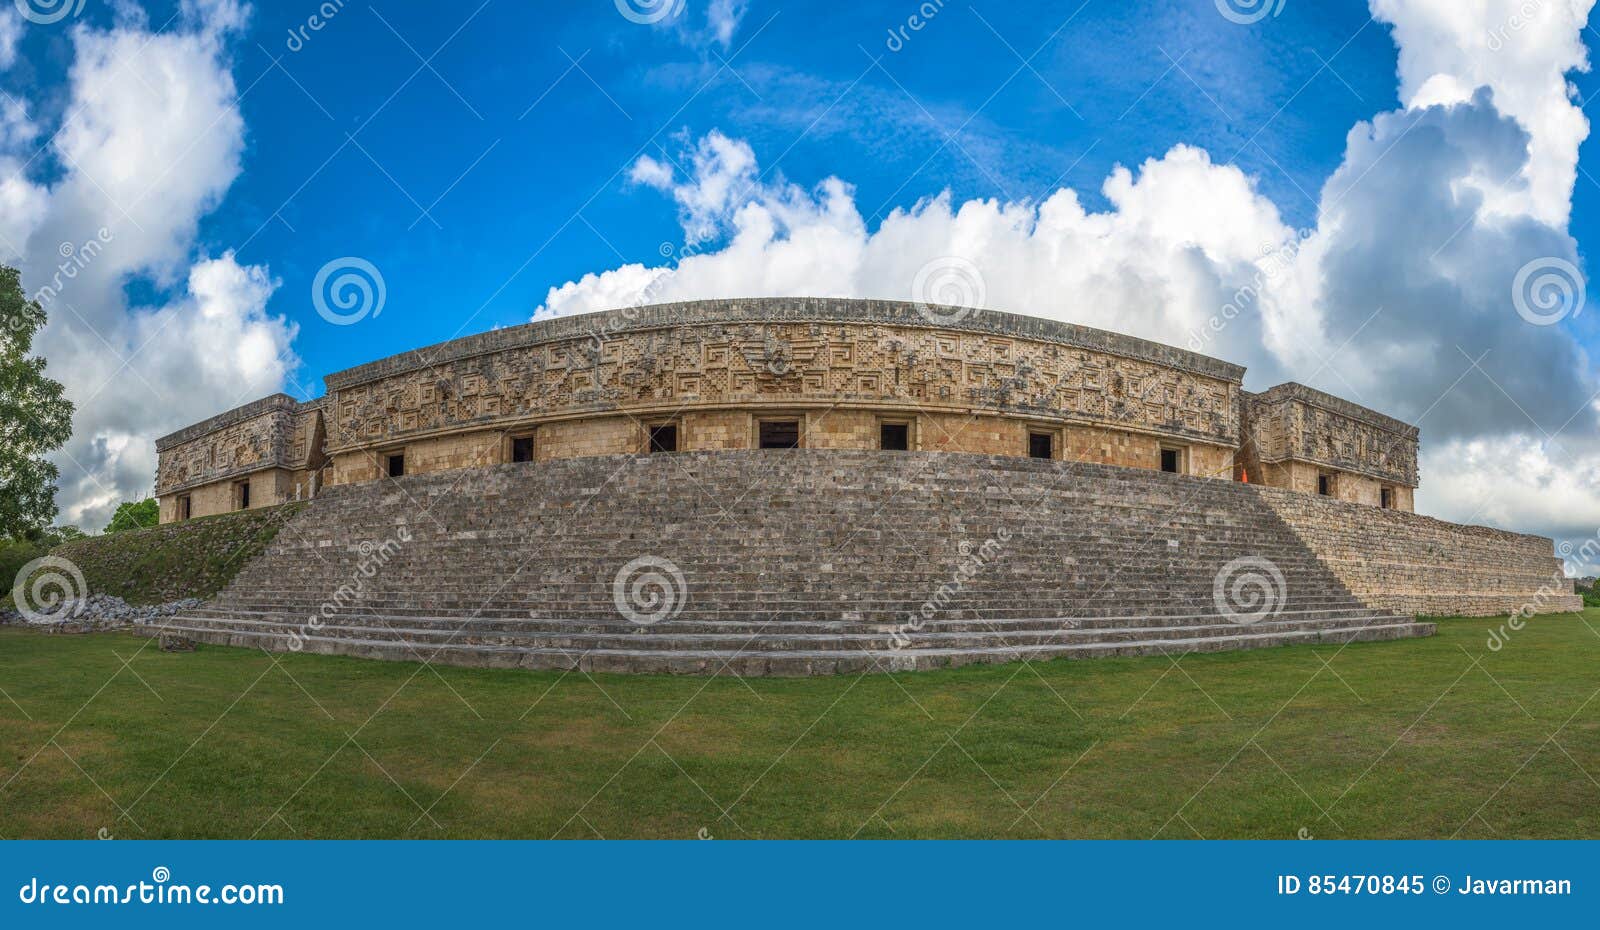 the governor`s palace in an ancient maya city of uxmal, yucatan